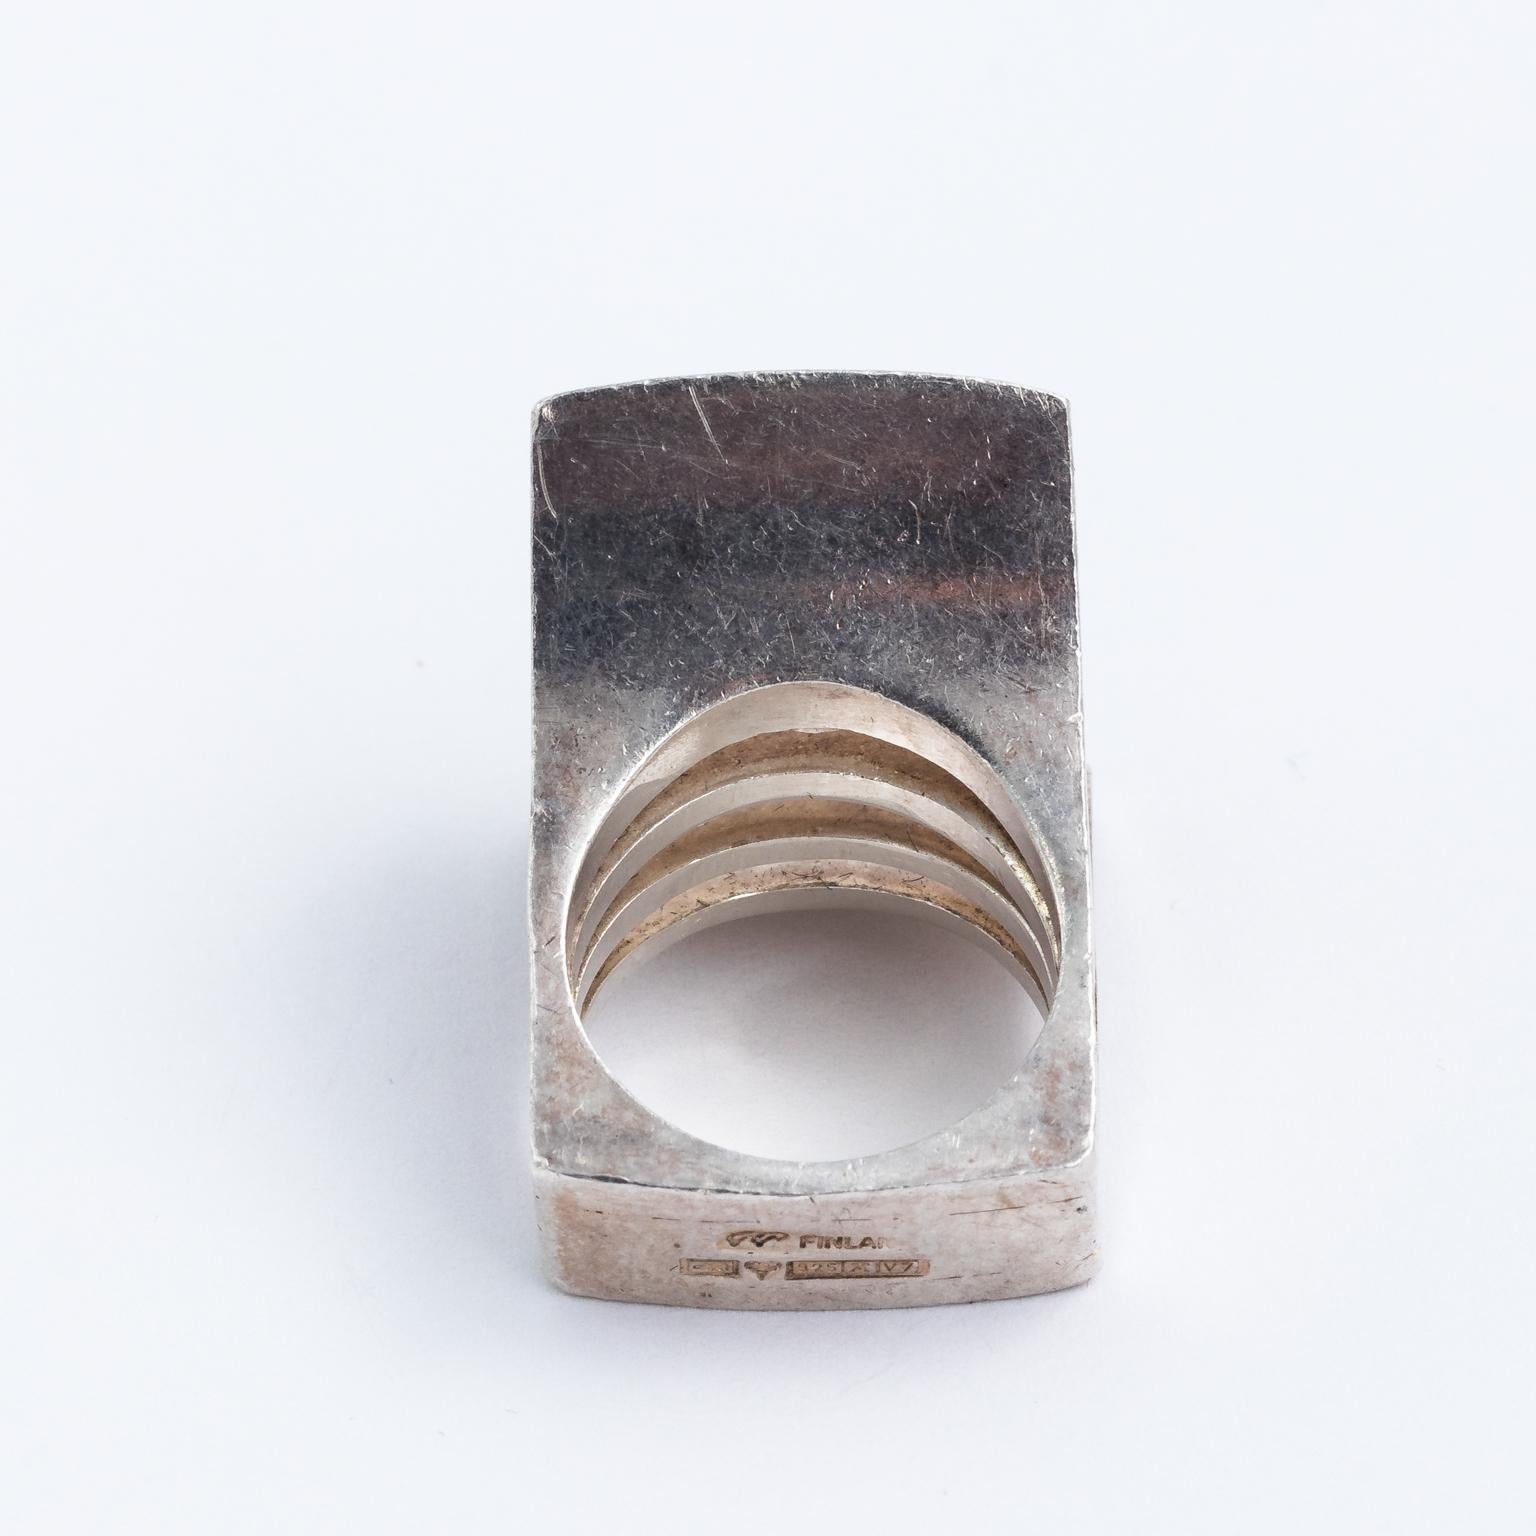 Rare heavy sterling silver ring by finnish designer Pekka
Piekainen


